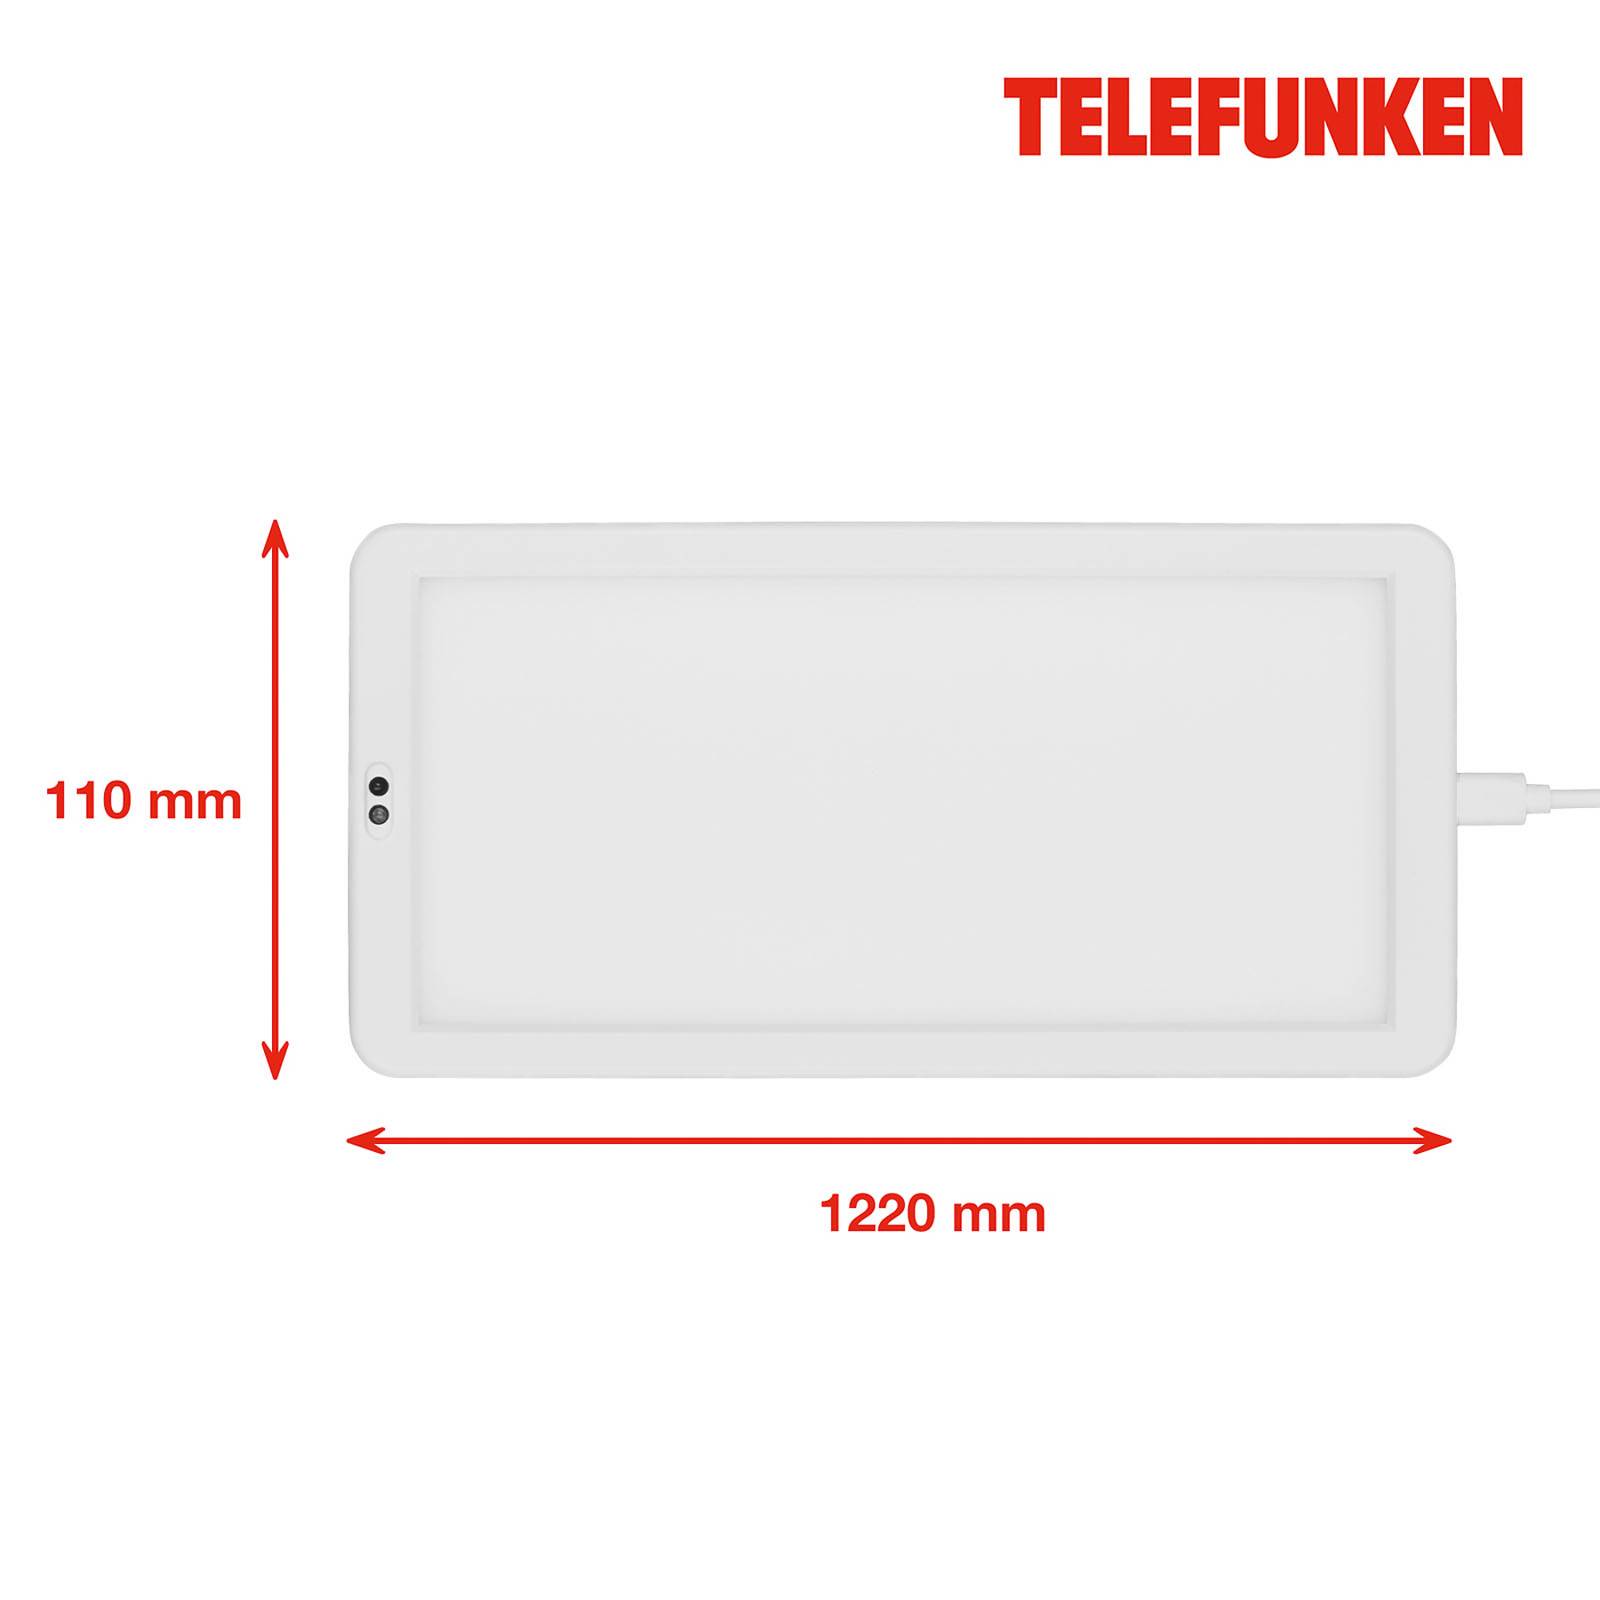 Telefunken LED-bänklampa Schu sensor 22x11cm vit 840